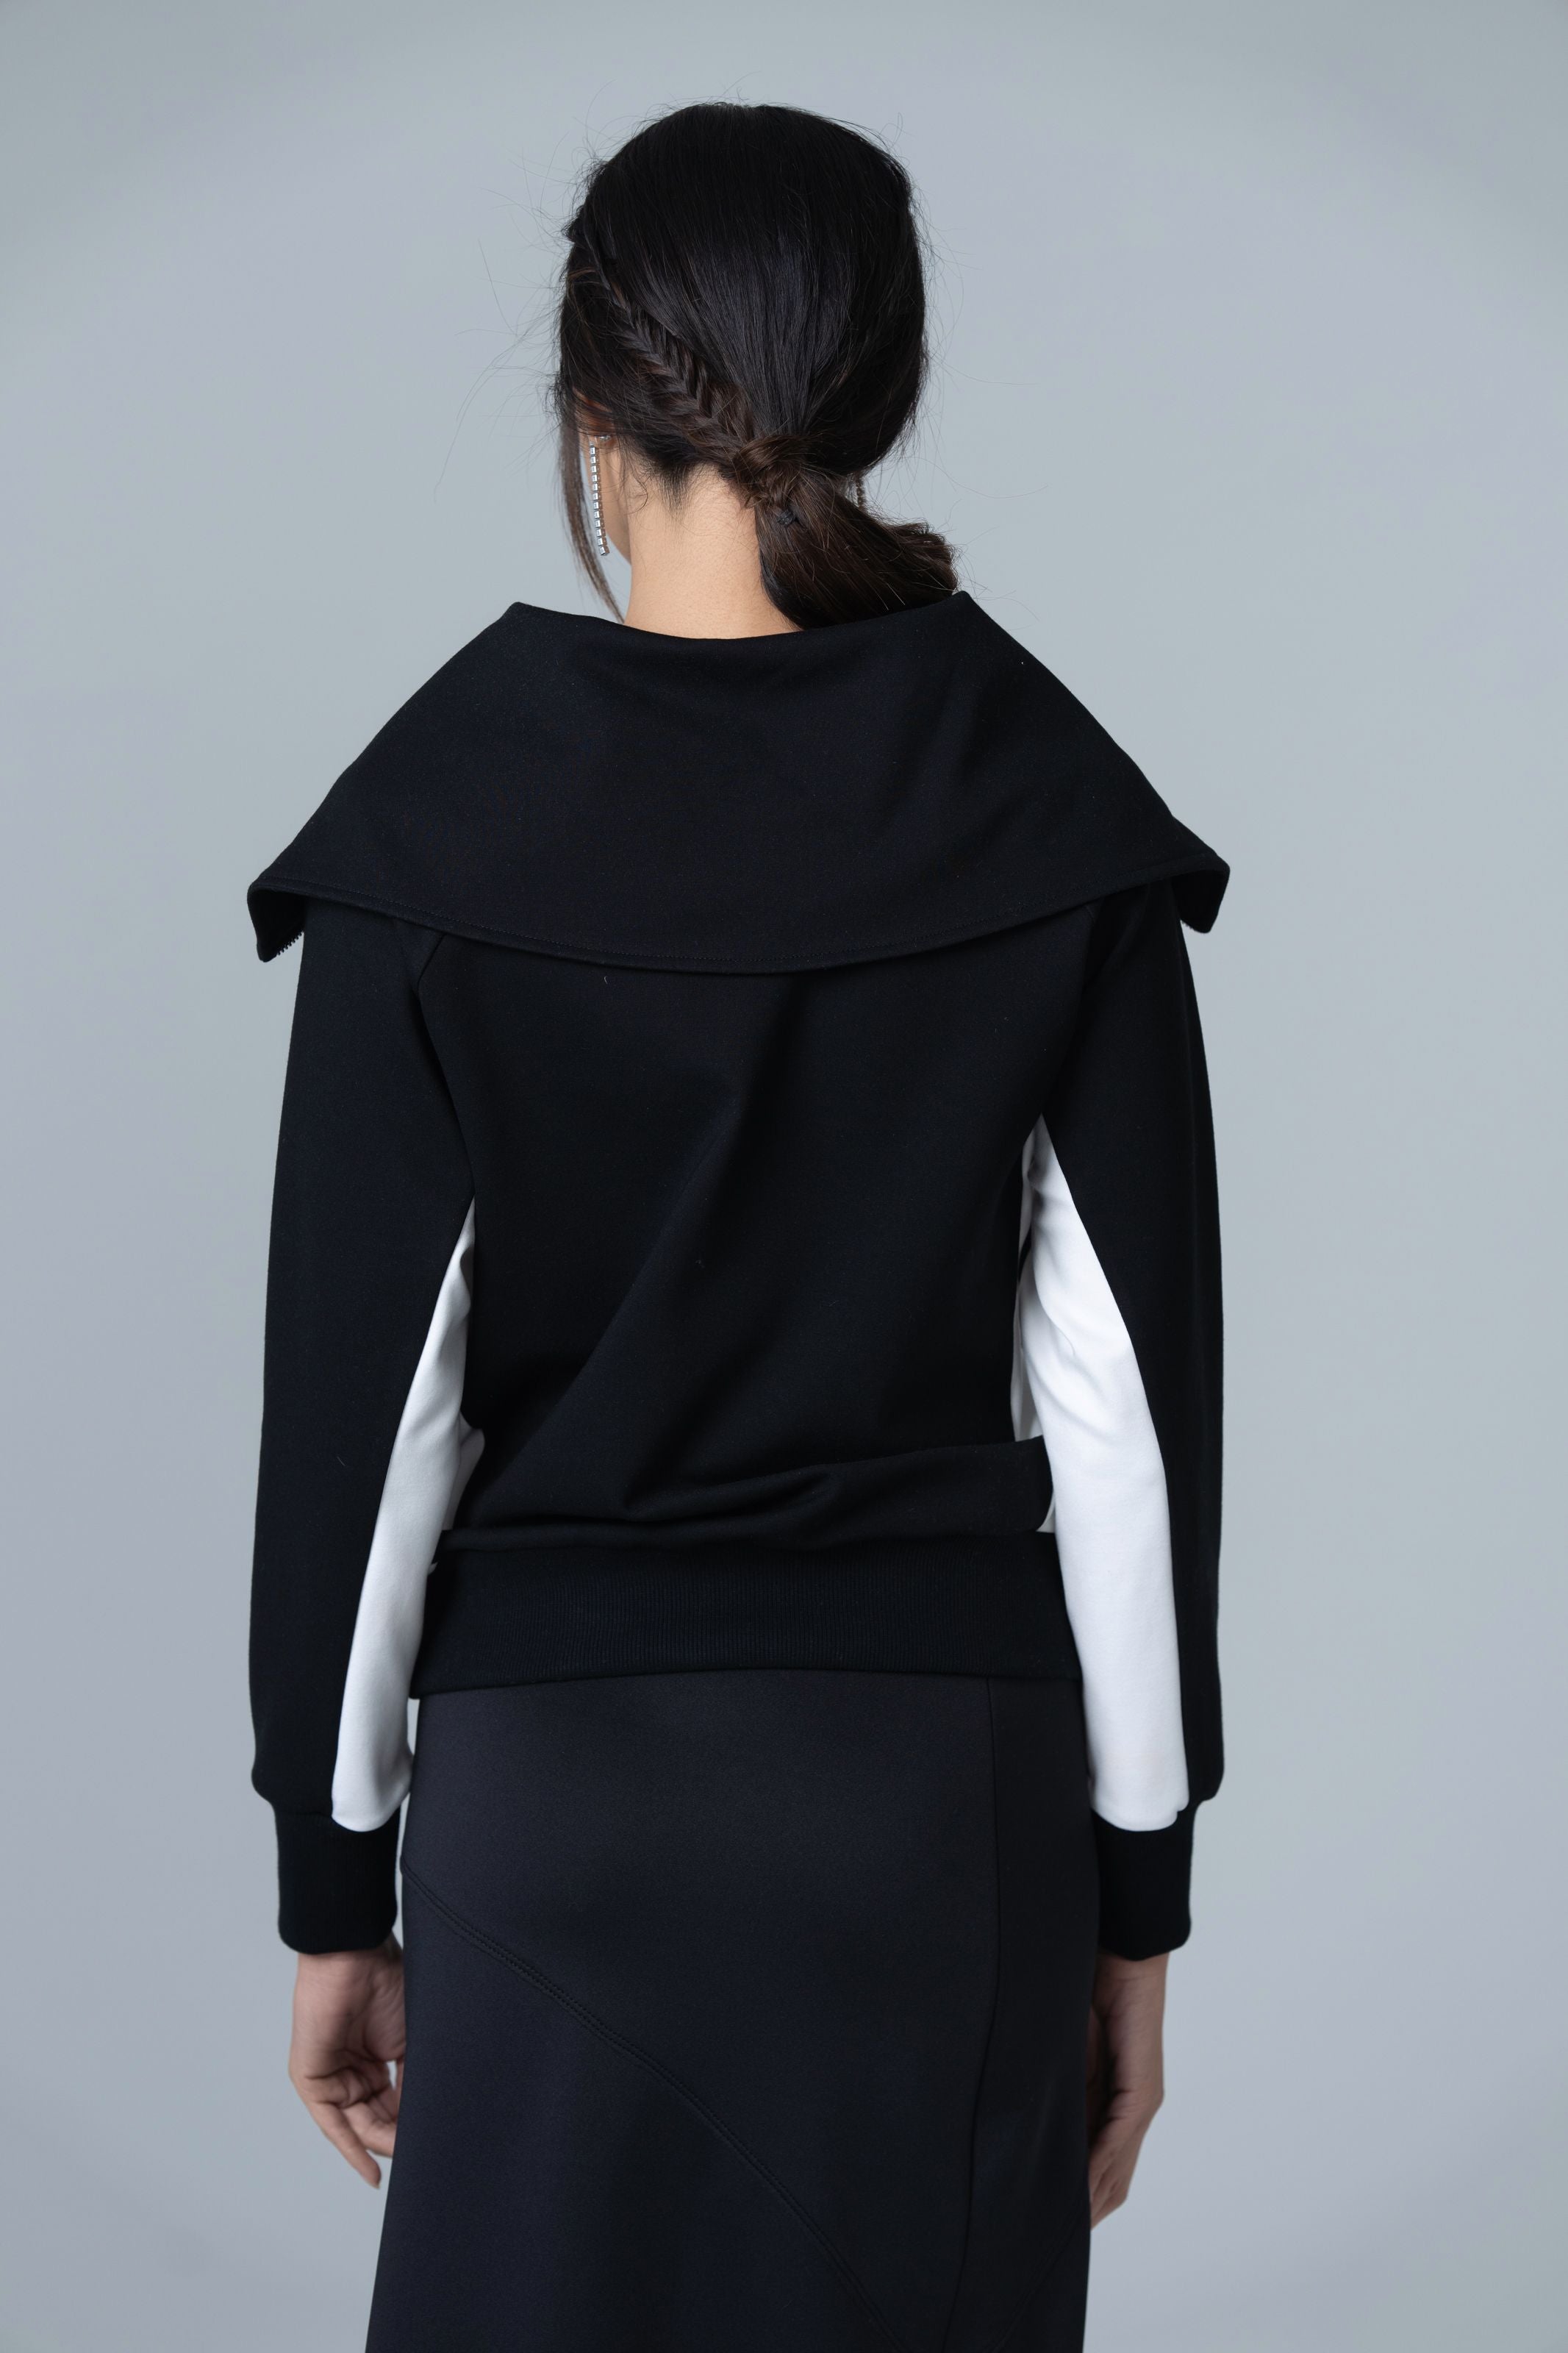 Anna Pullover Zipper Sweater - Black and Ivory - Olivvi World